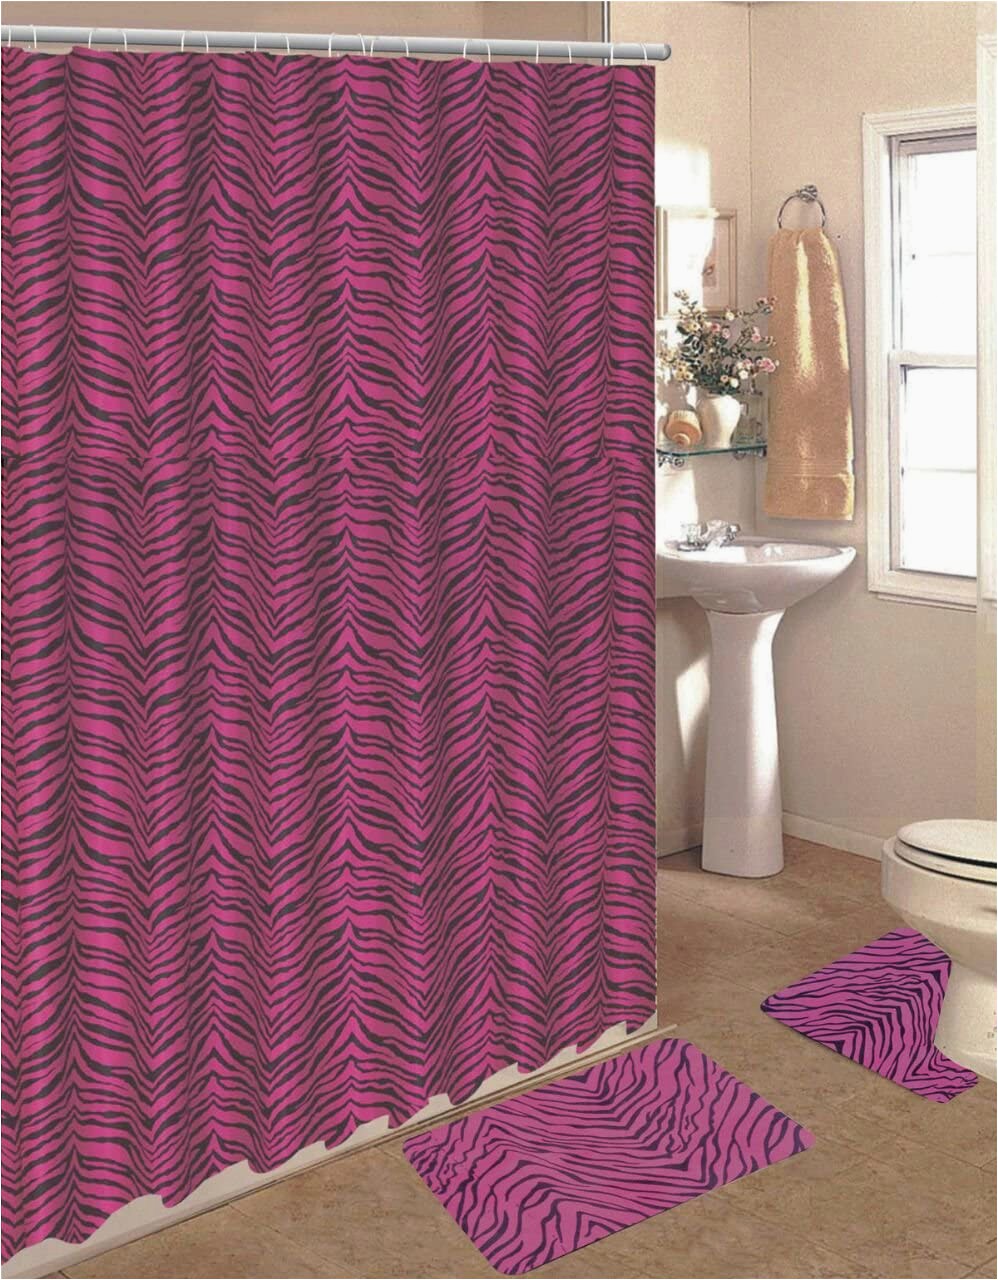 Hot Pink Bathroom Rug Set Wpm 15 Piece Zebra Animal Print Memory Foam Bath Rug Set Bathroom Rugs with Fabric Shower Curtain and Decorative Rings Pink Zebra